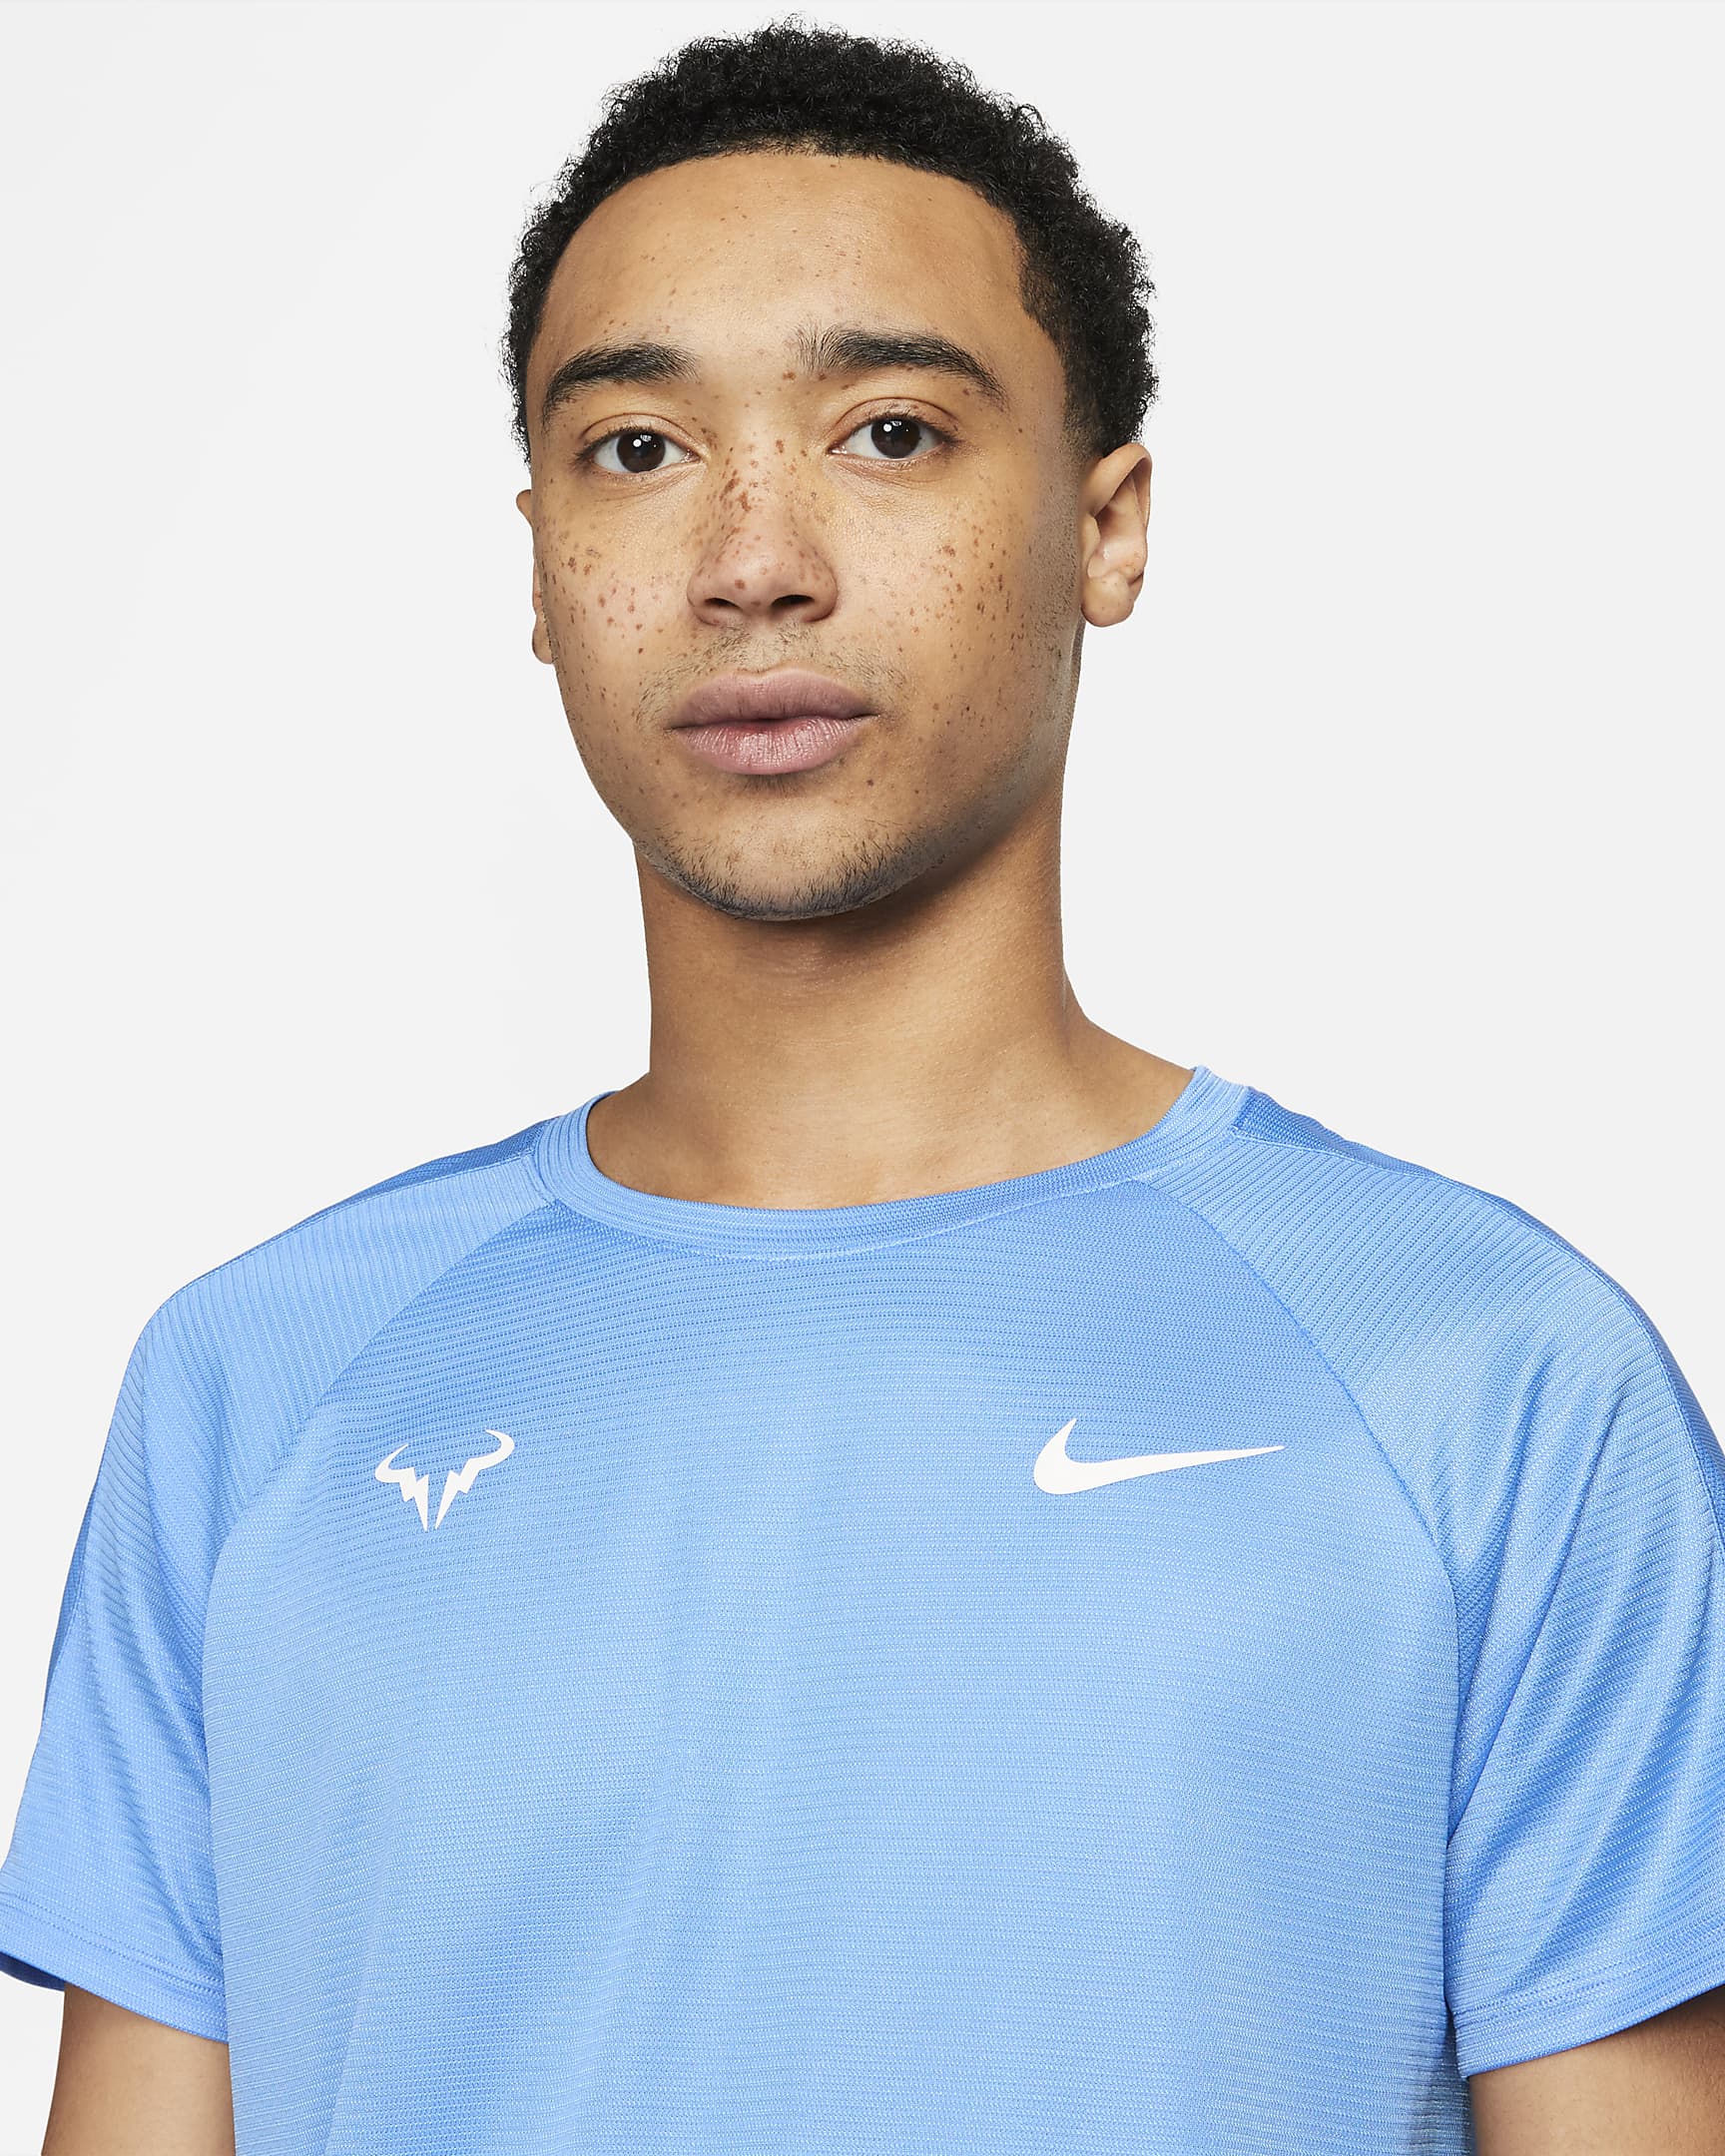 Rafa Challenger Men's Nike Dri-FIT Short-Sleeve Tennis Top. Nike SK